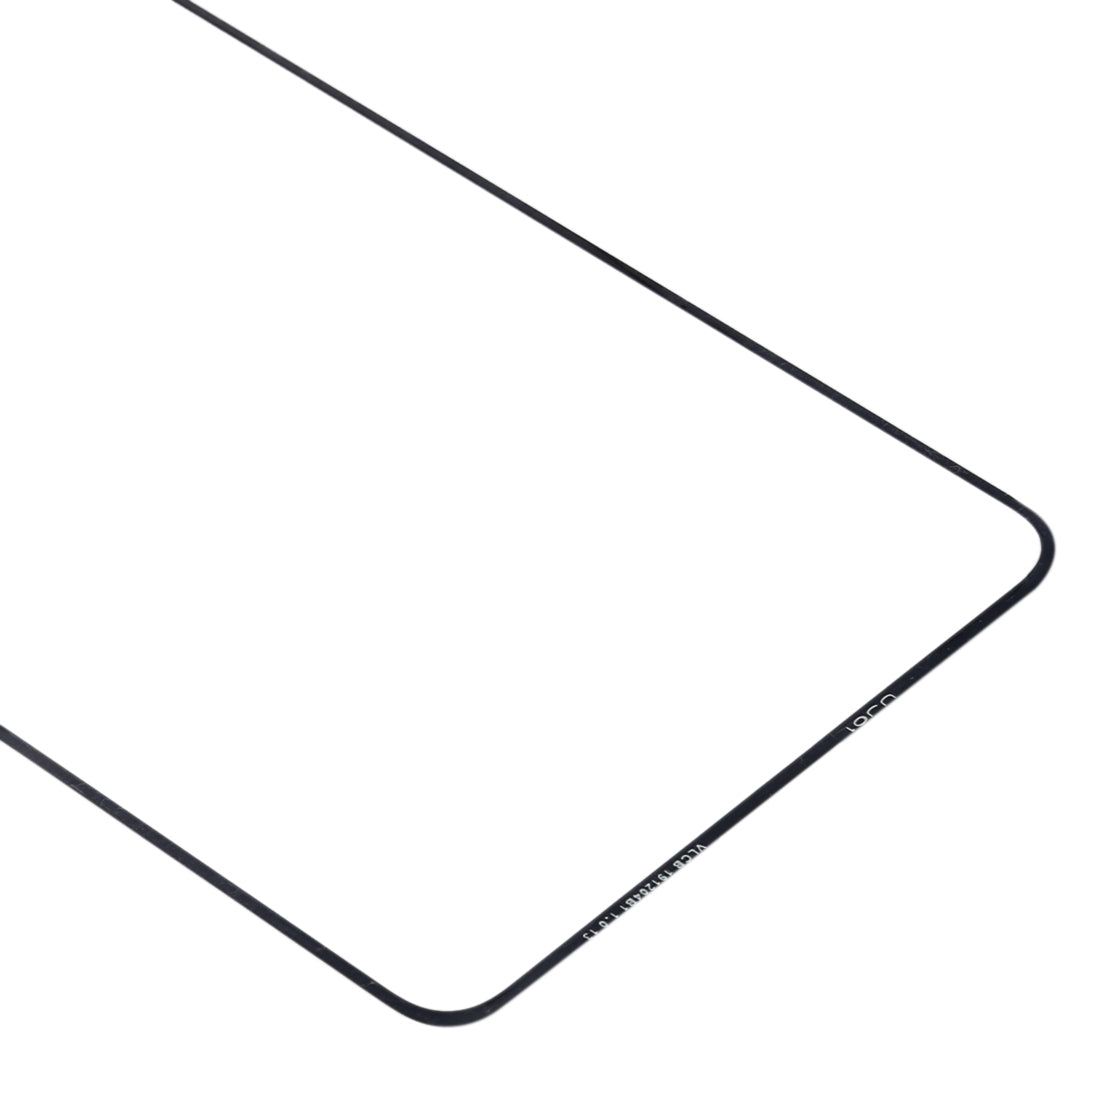 Cristal Pantalla Frontal + Adhesivo OCA Xiaomi Redmi Note 10 5G